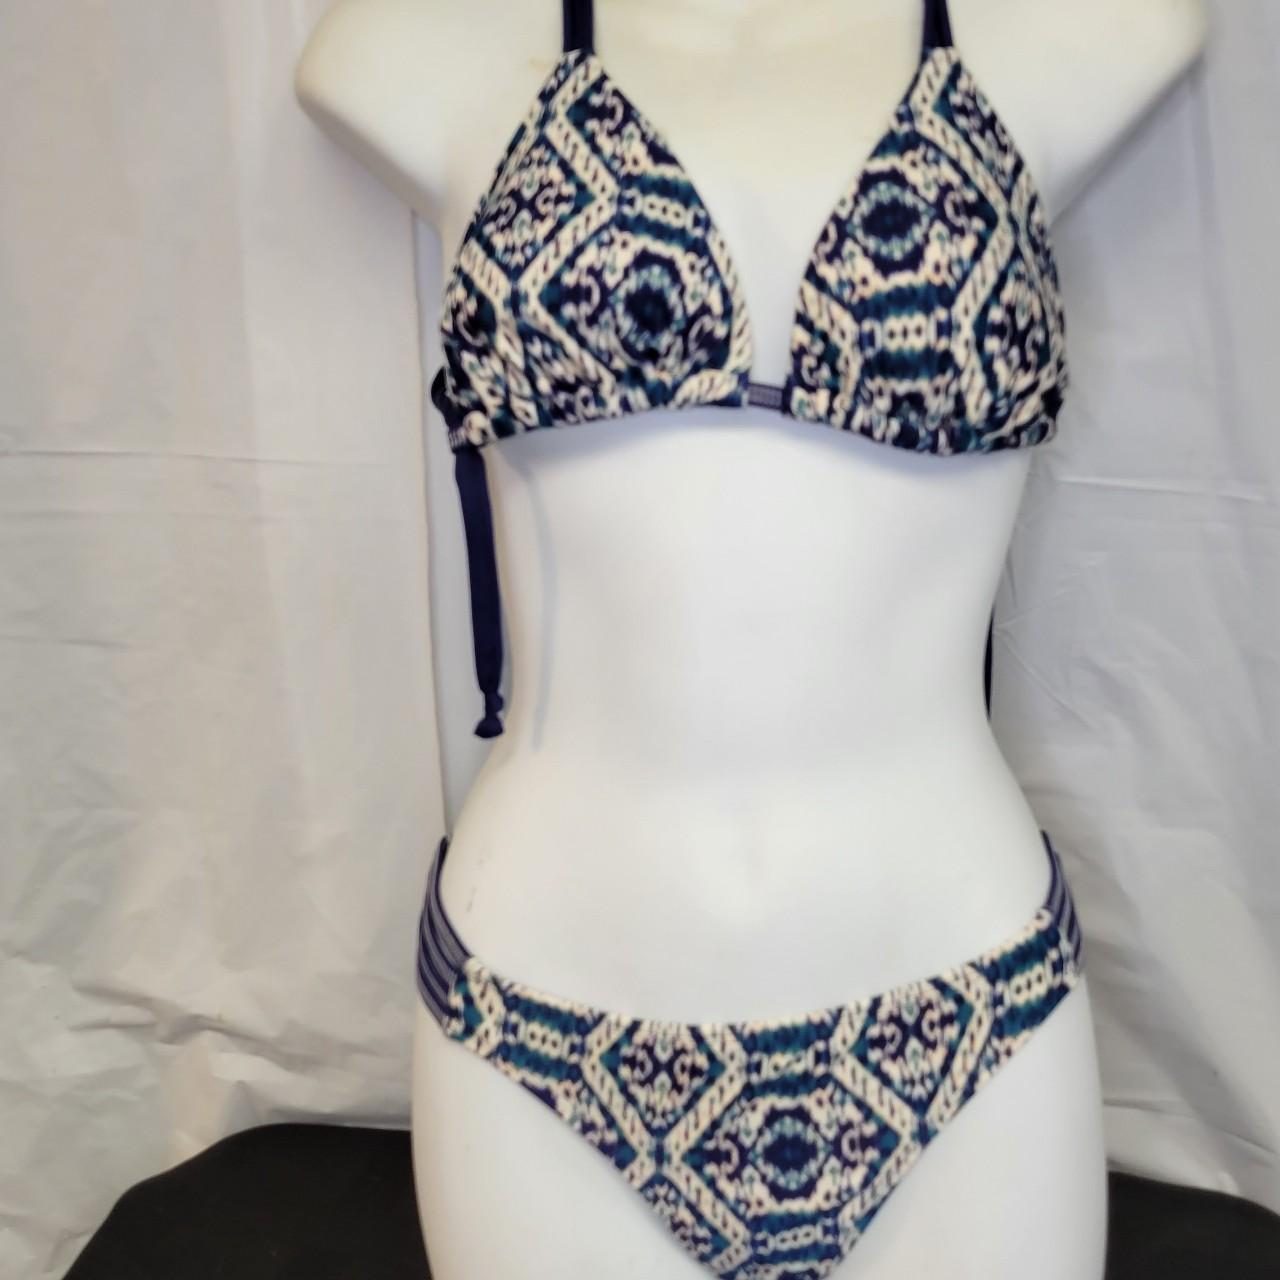 Body Glove Women's White and Blue Bikinis-and-tankini-sets